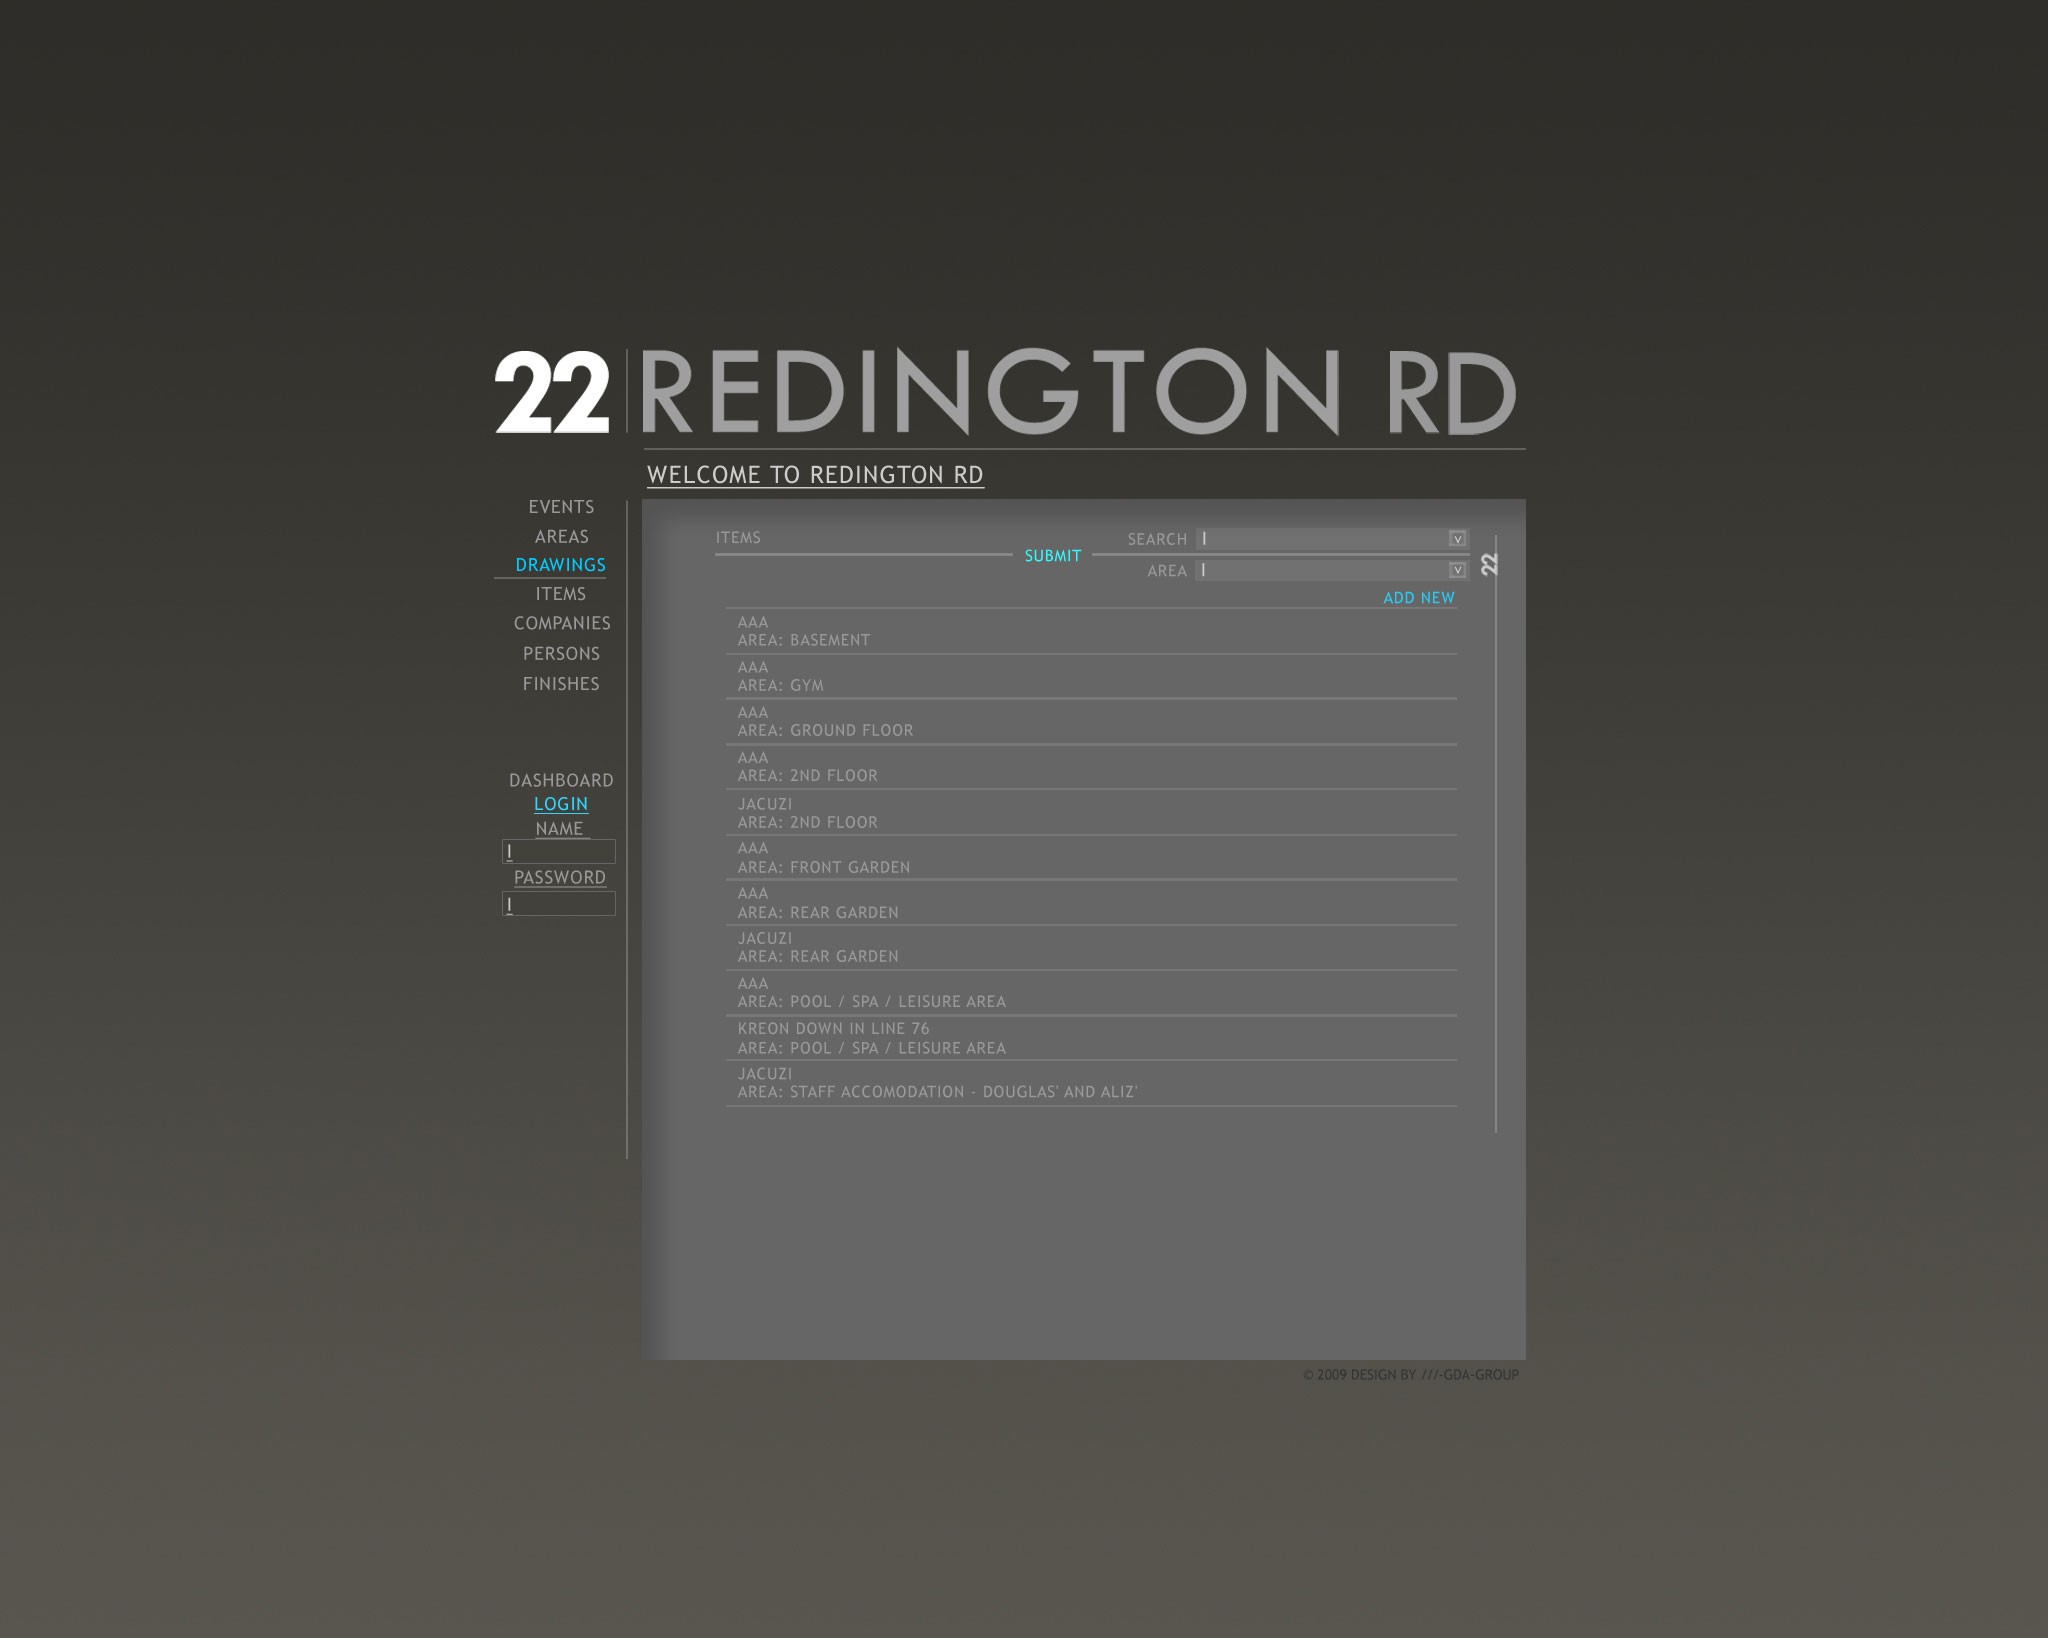 Applikationsentwicklung - REDINGTON RD